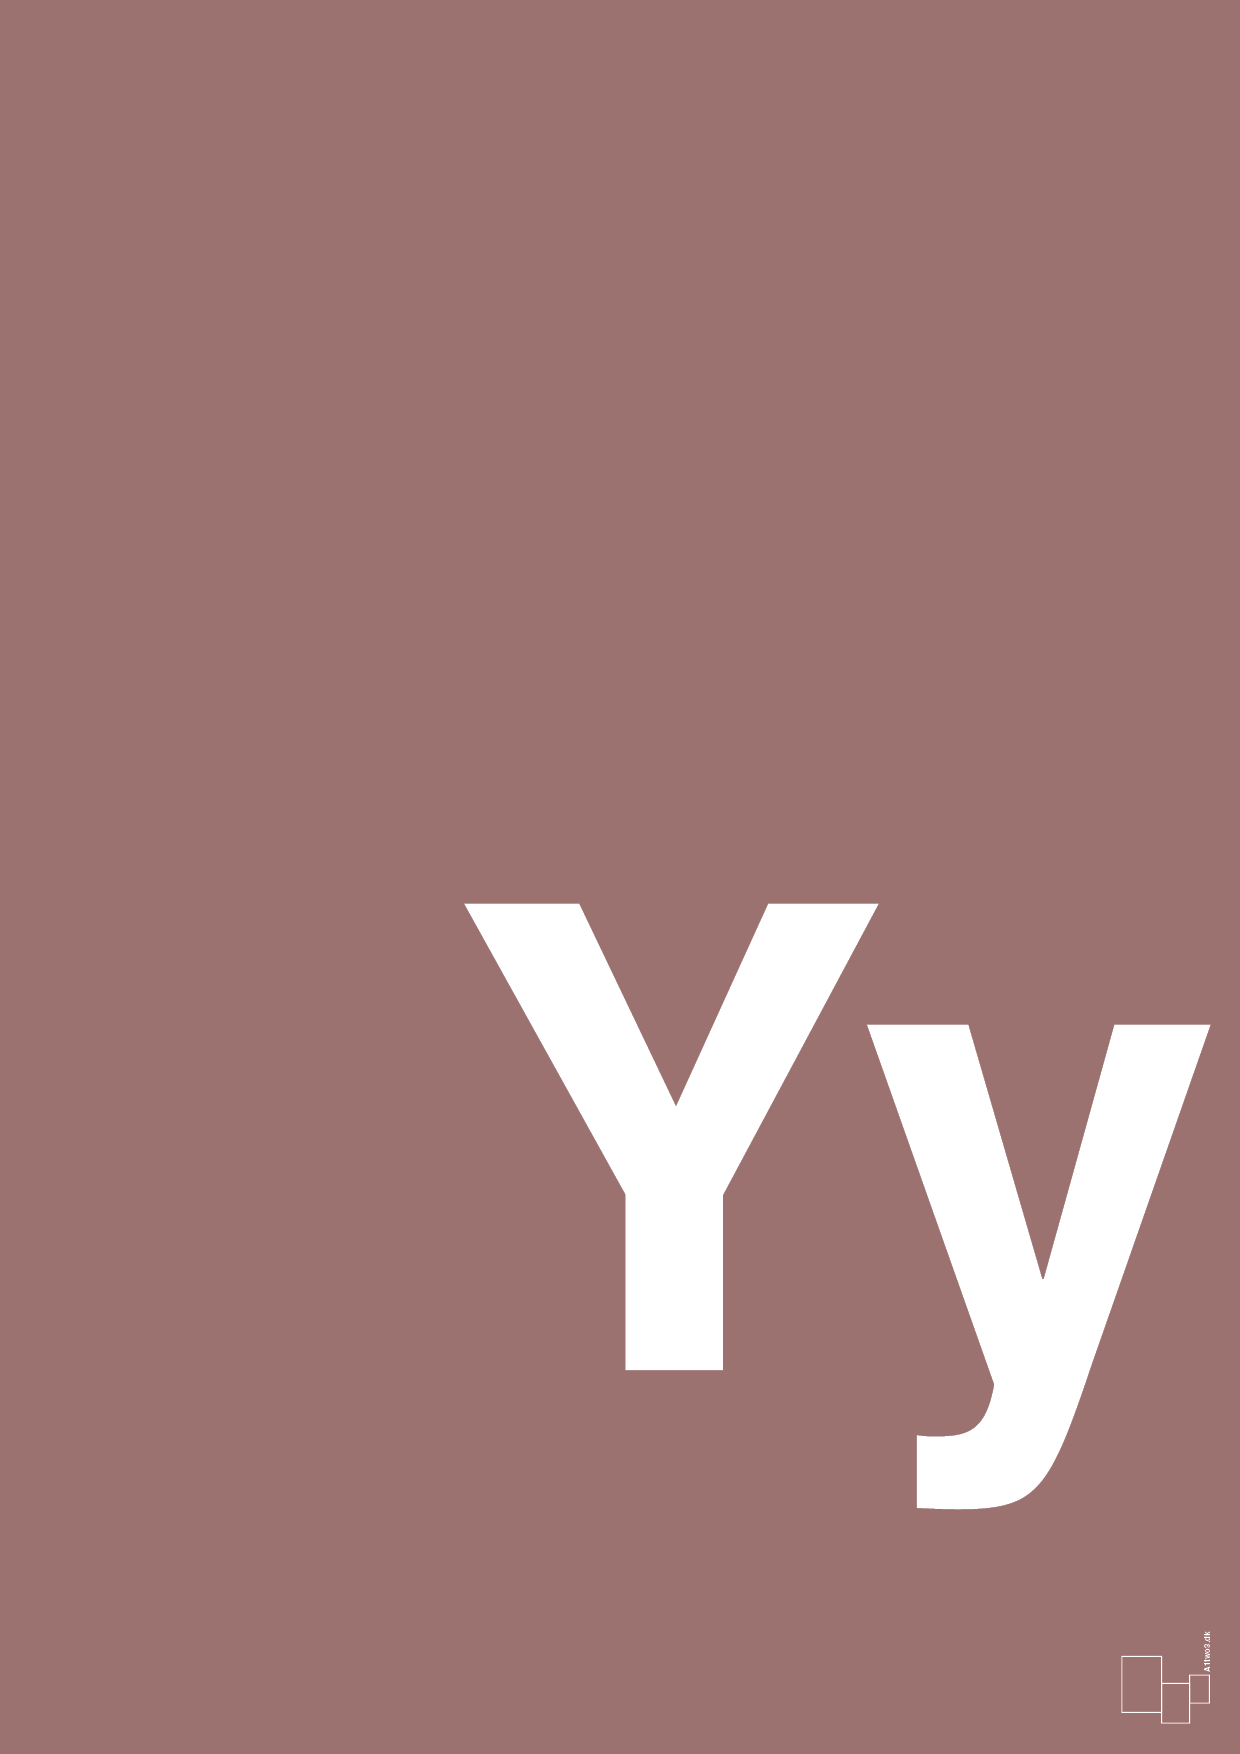 bogstav yy - Plakat med Bogstaver i Plum